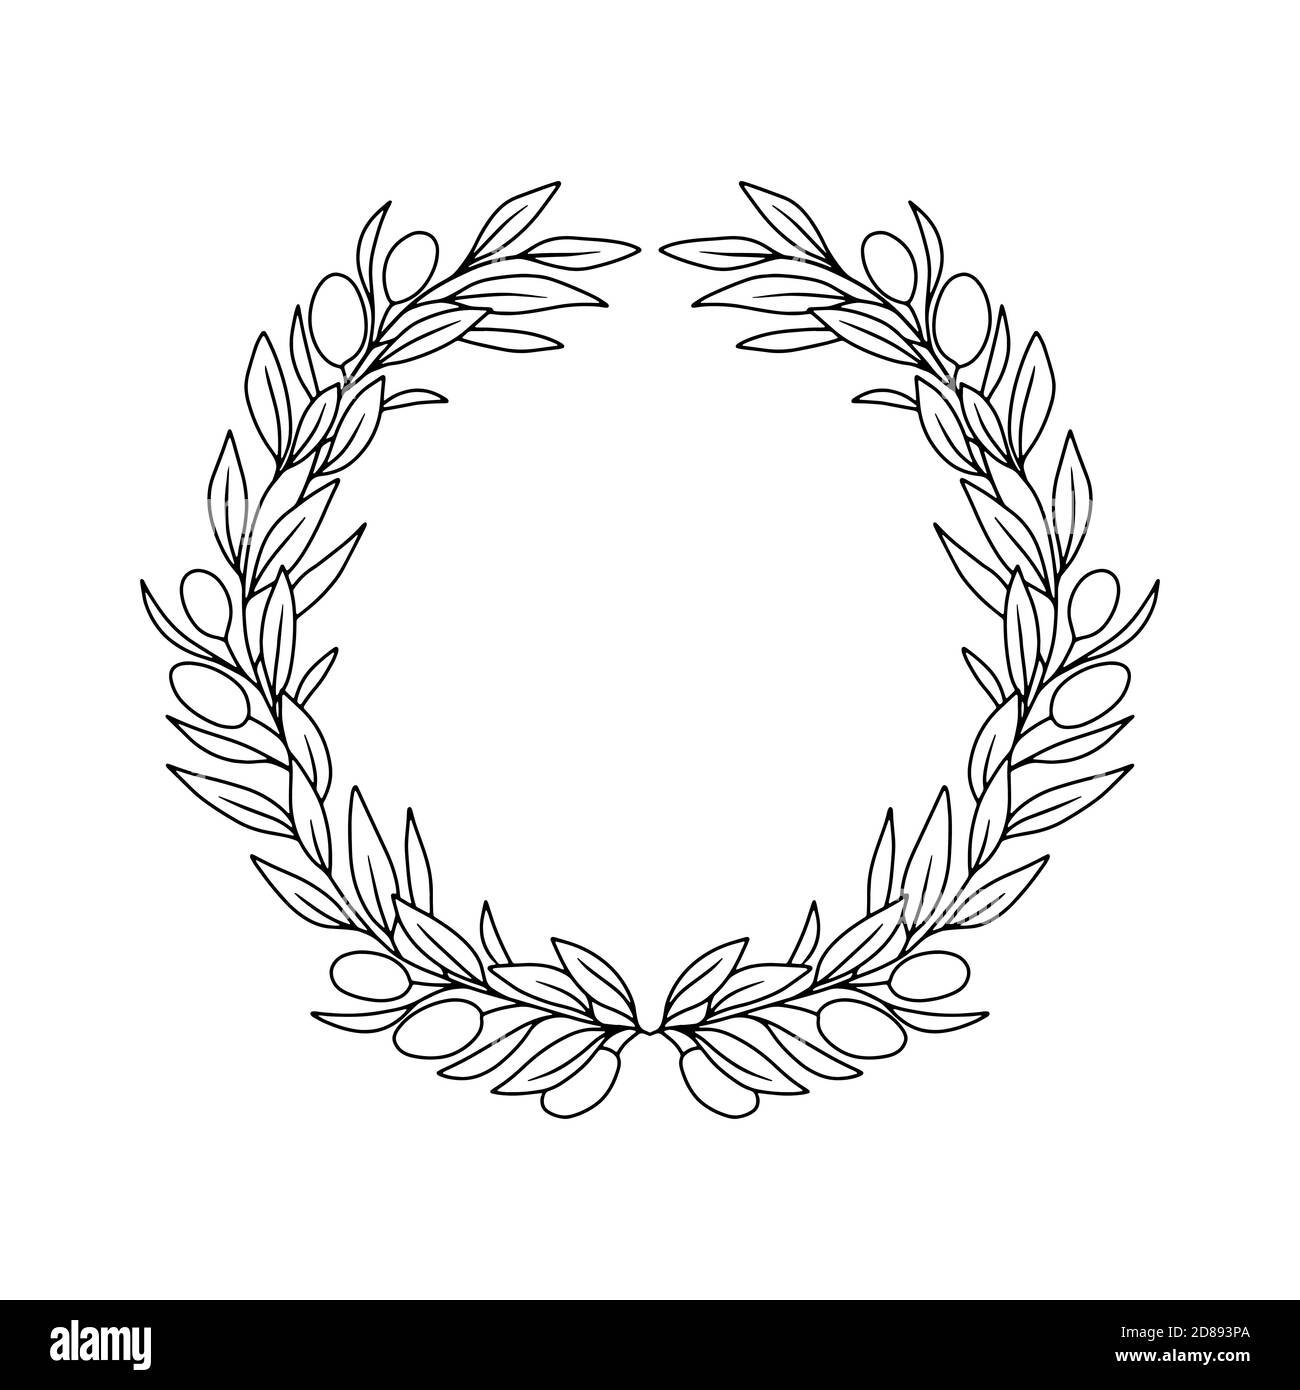 Olives branches wreath. Greek frame vector illustration. Leaves and olives.  Stock Vector